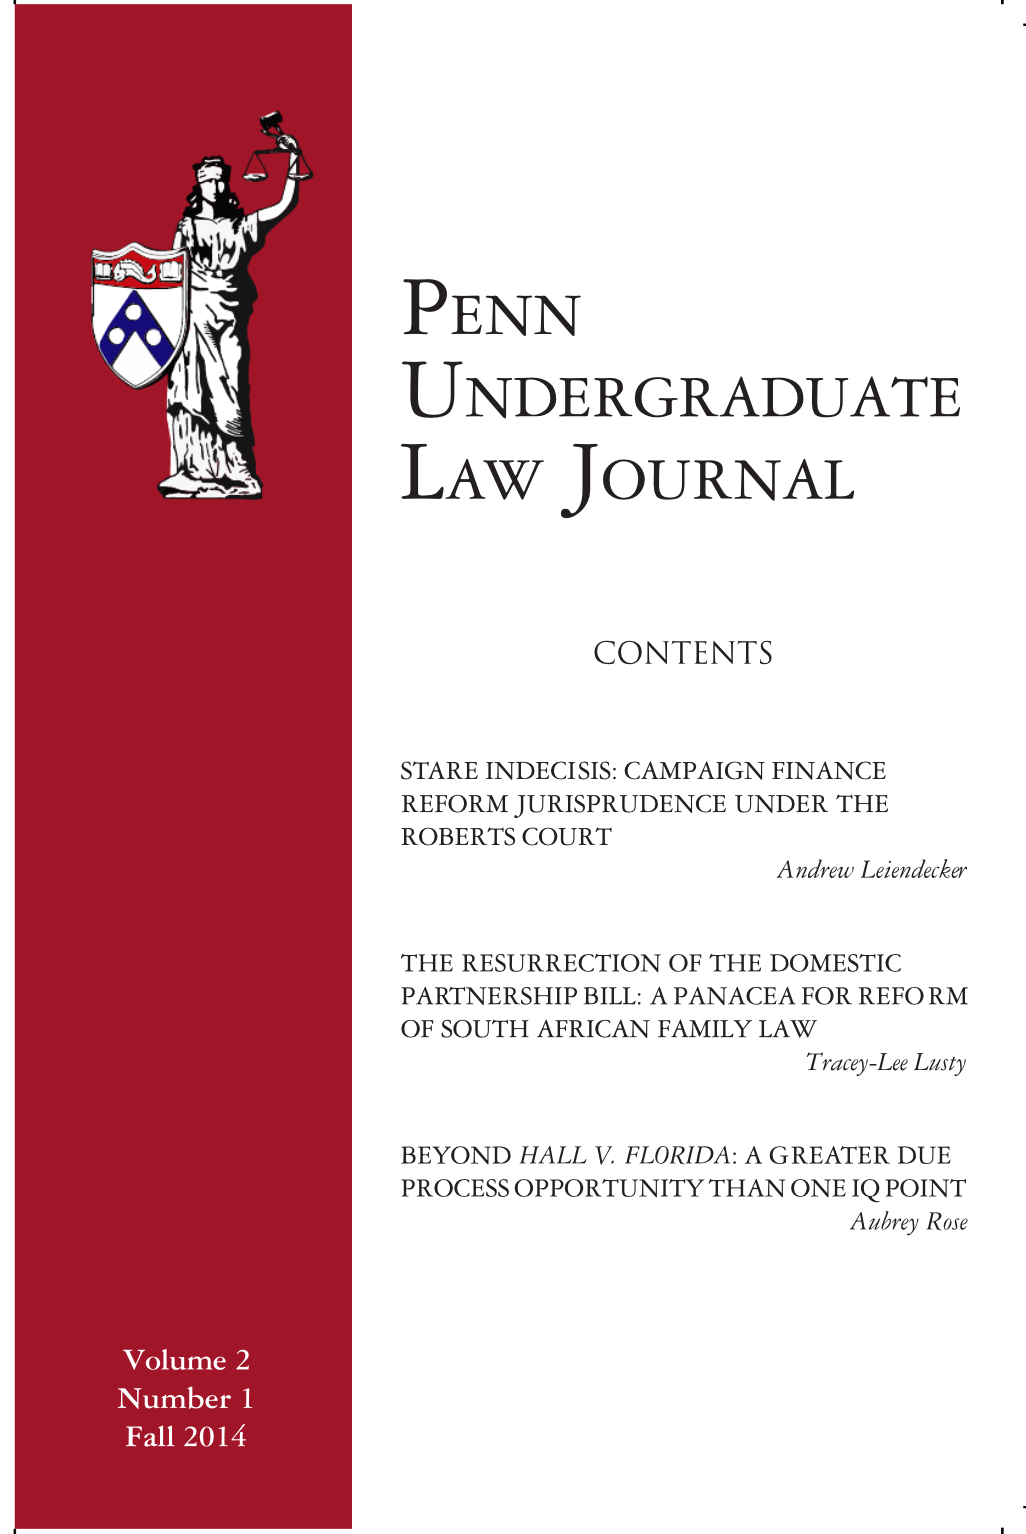 Penn Undergraduate Law Journal